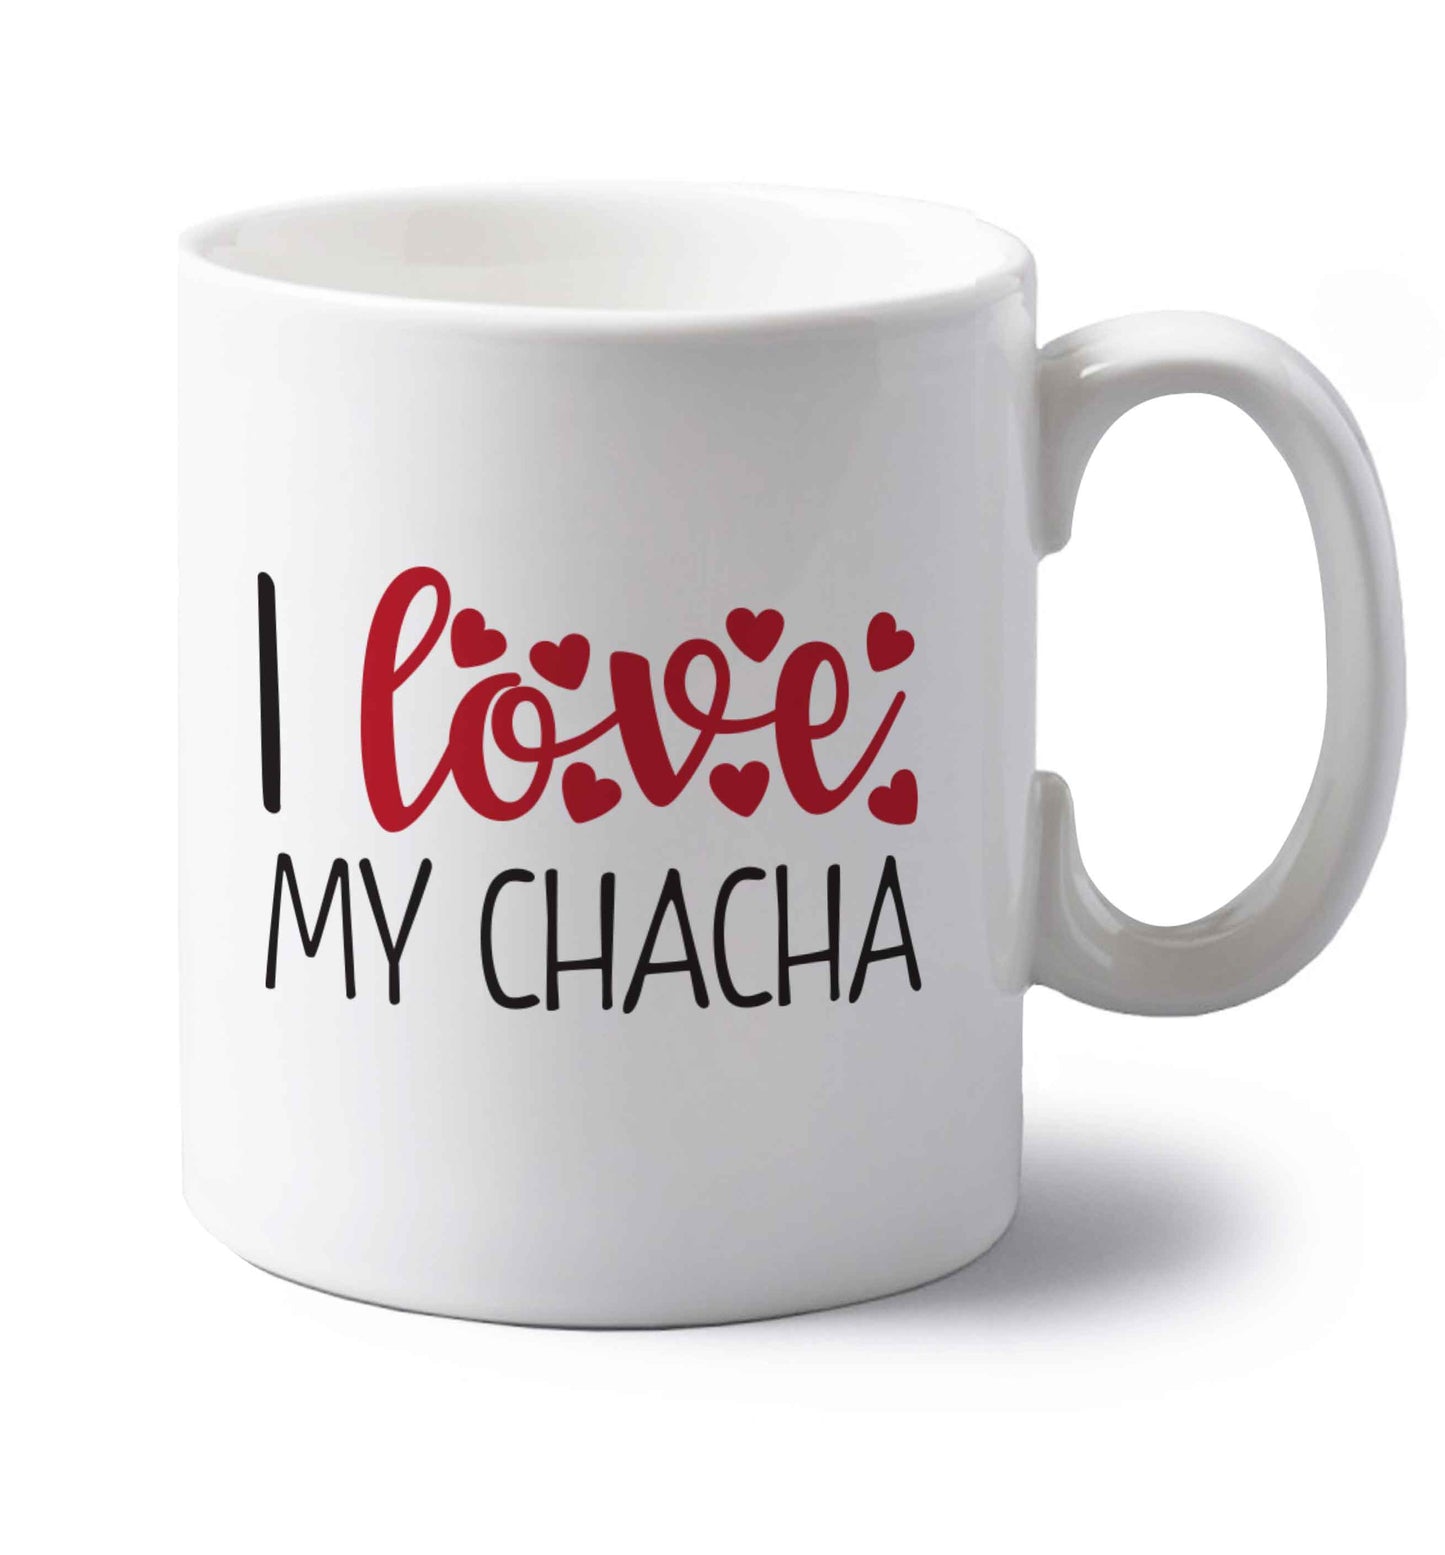 I love my chacha left handed white ceramic mug 